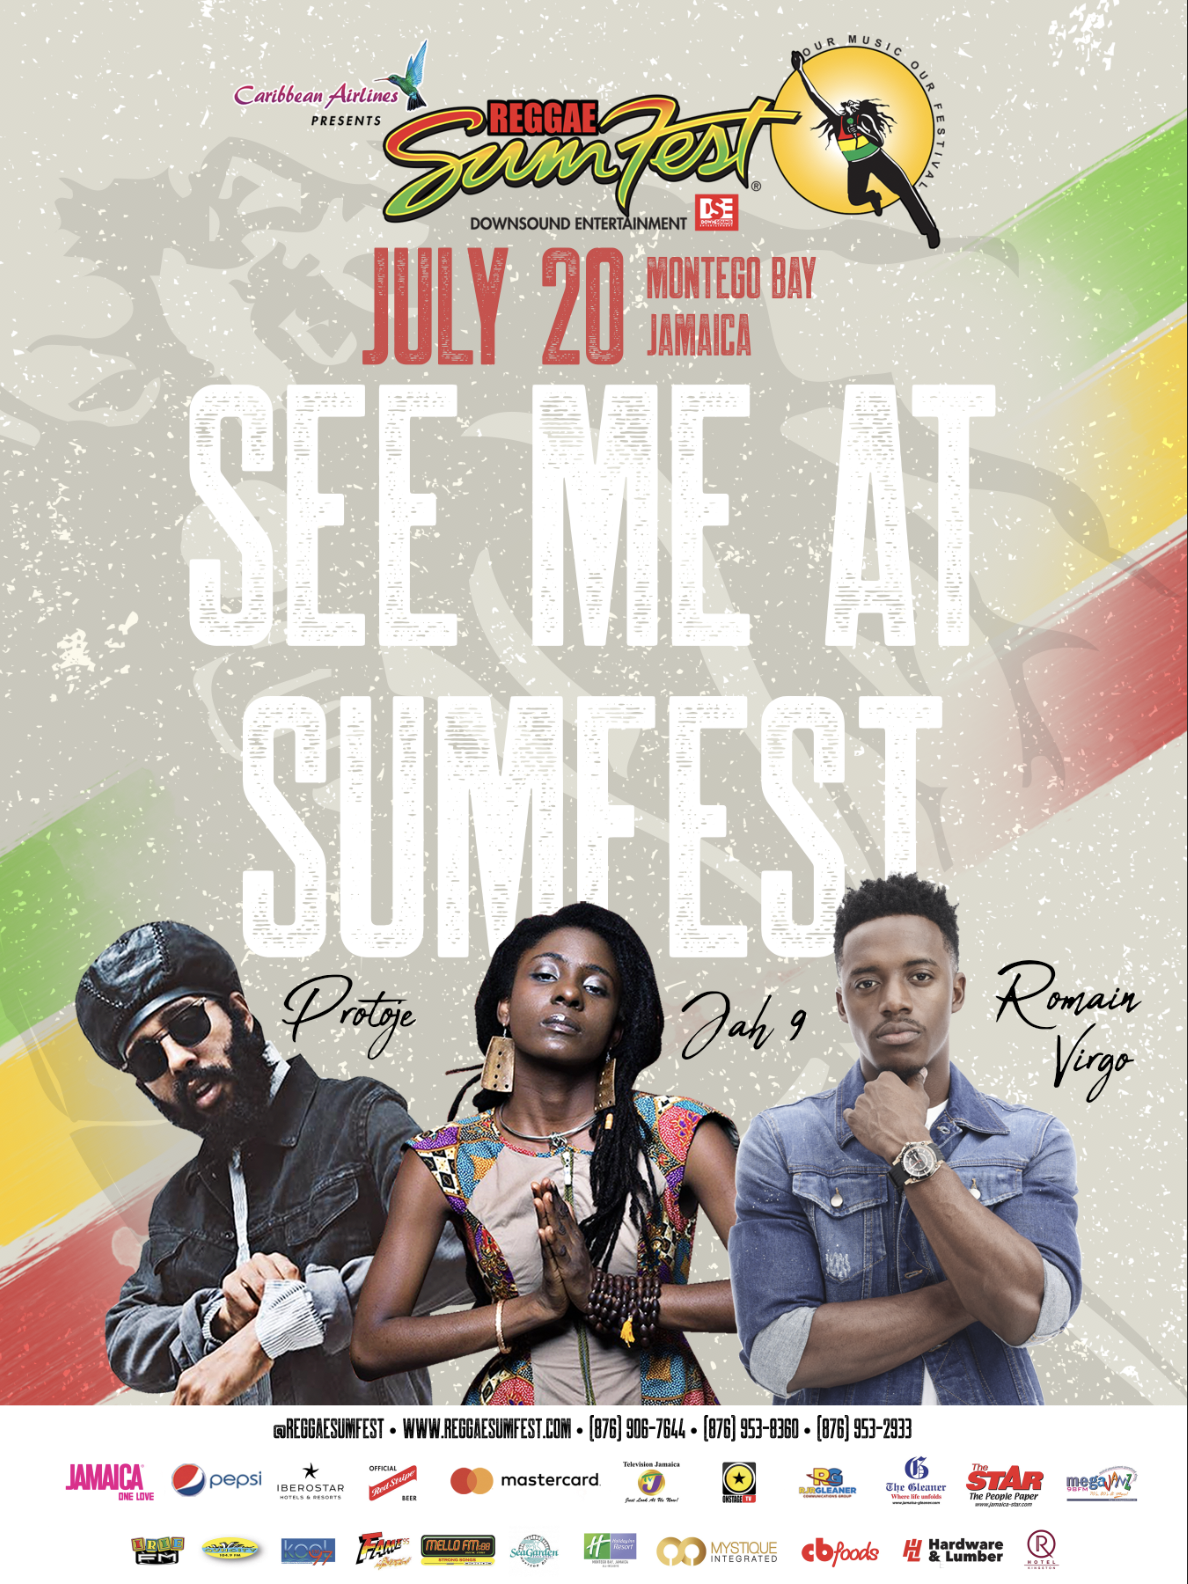 Reggae Sumfest Our Music Our Festival